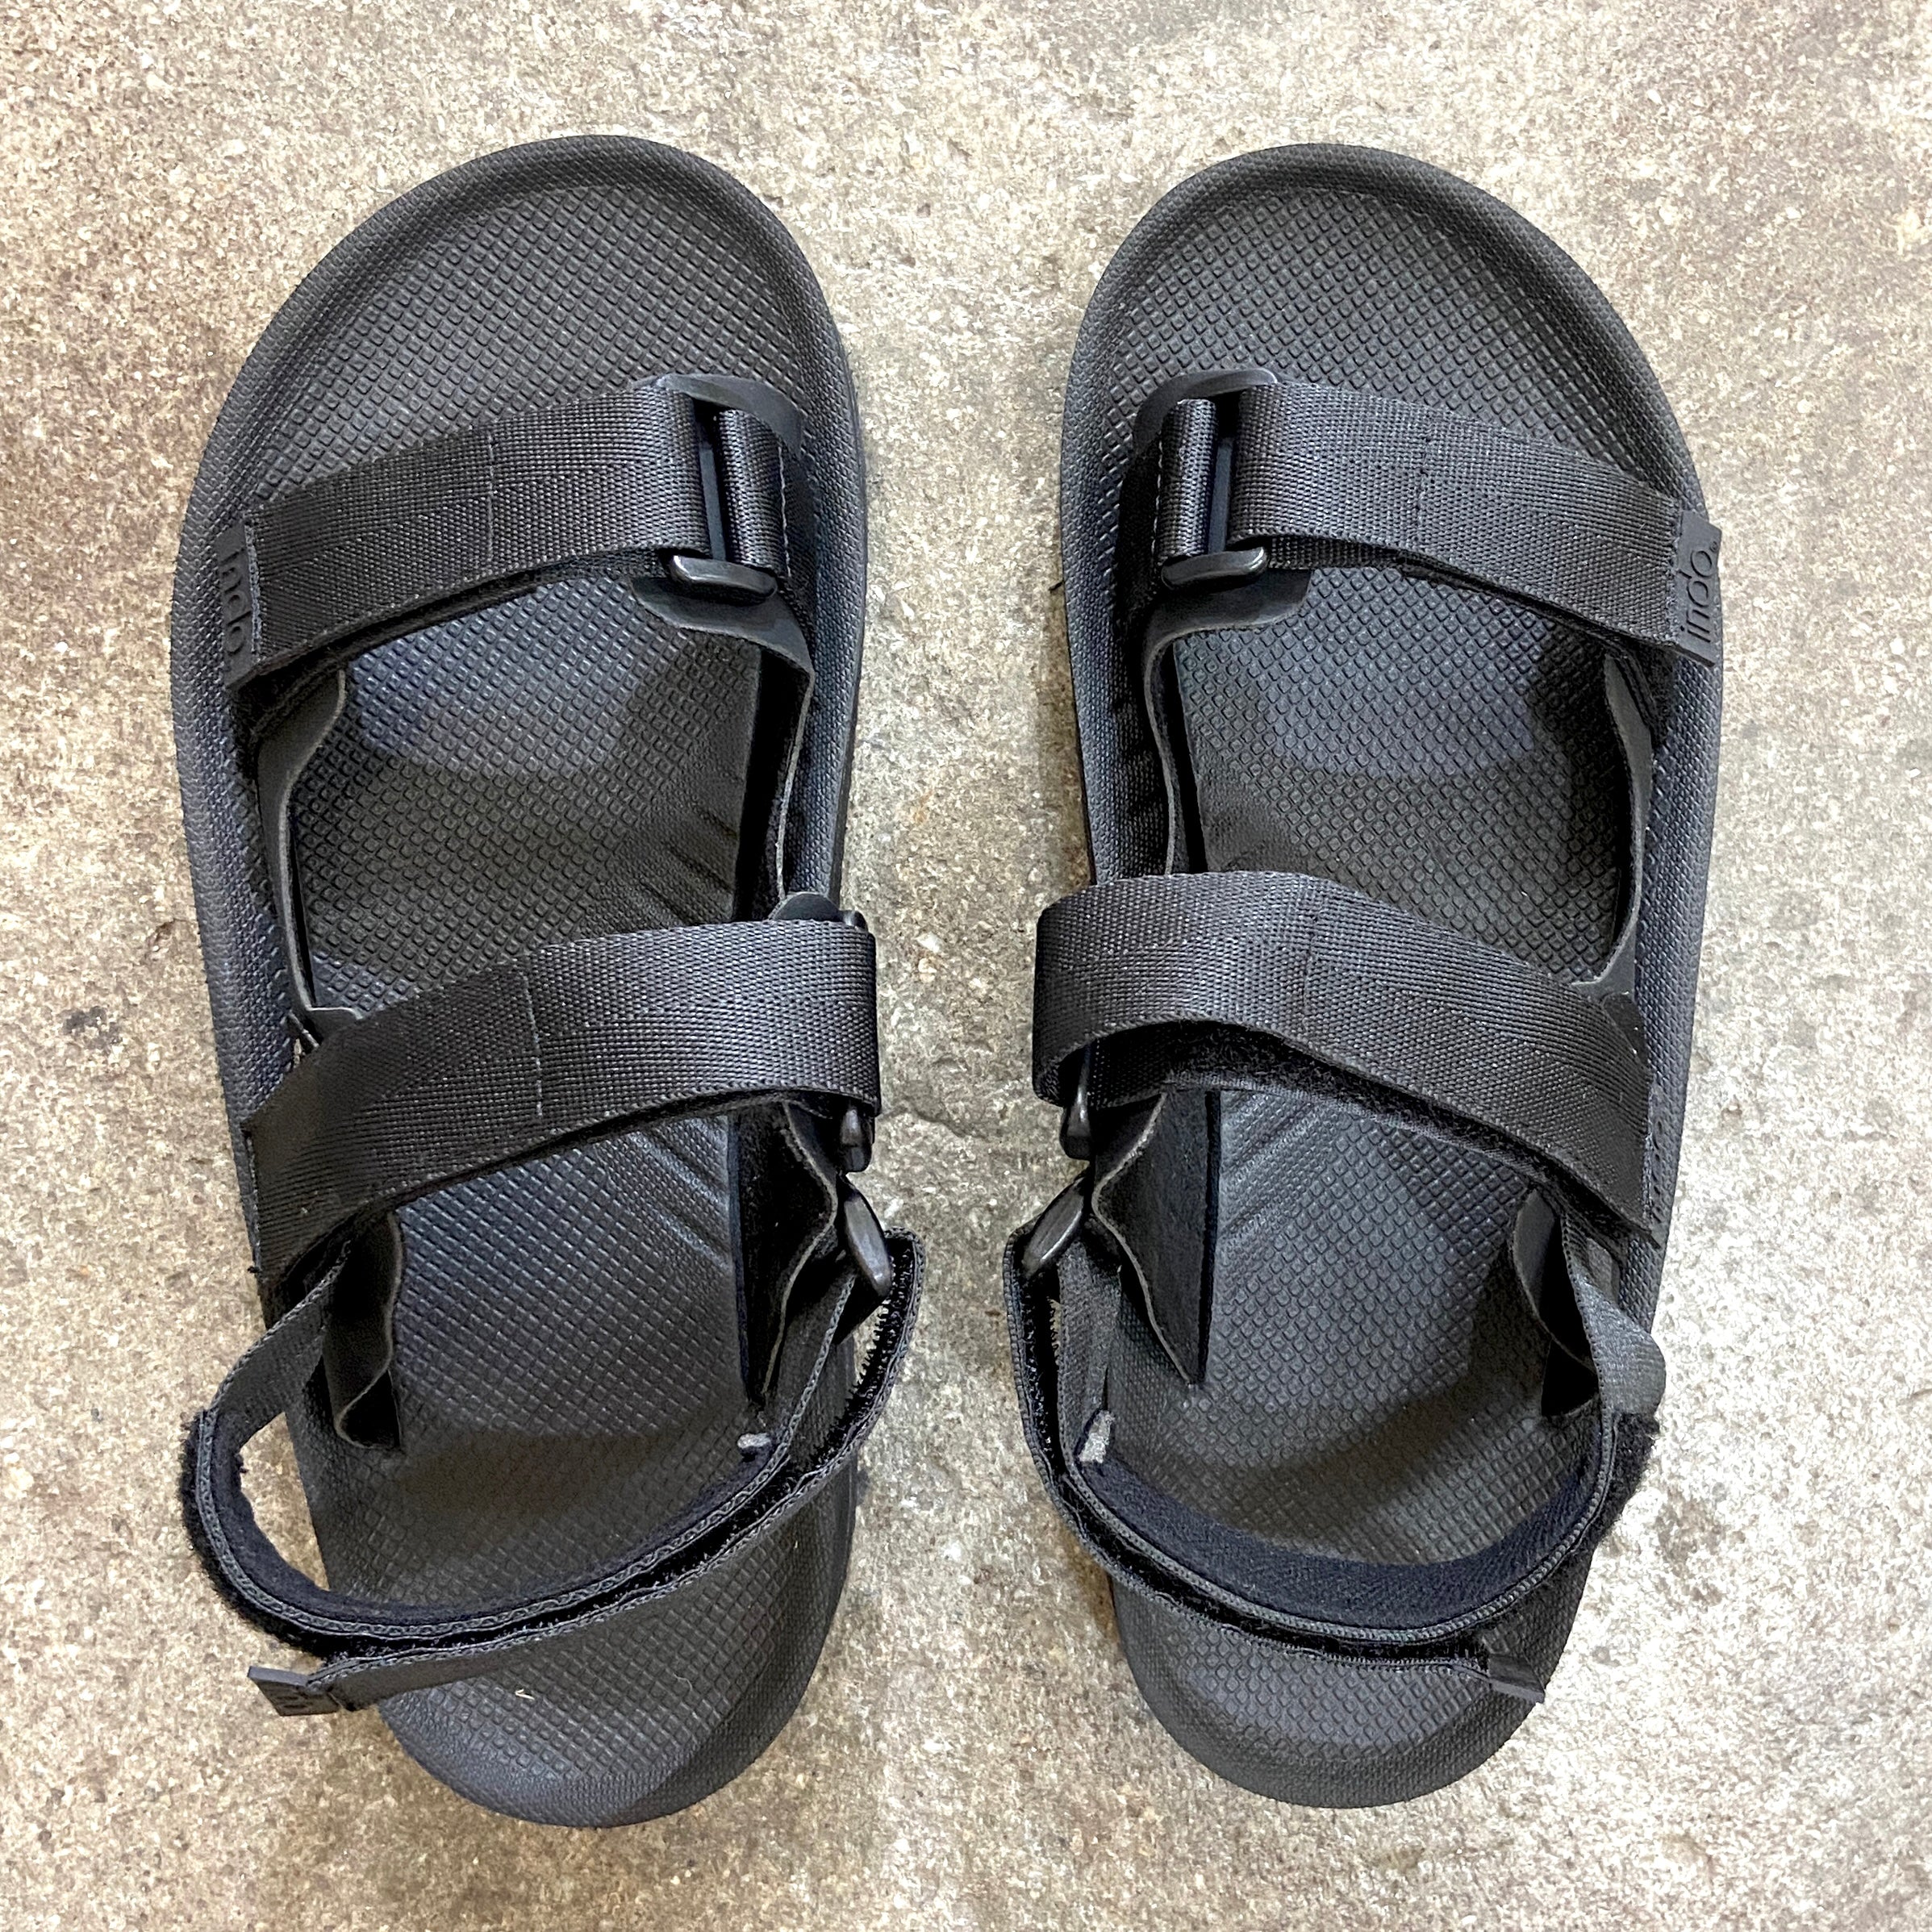 Sandal Shop – Crocs South Africa